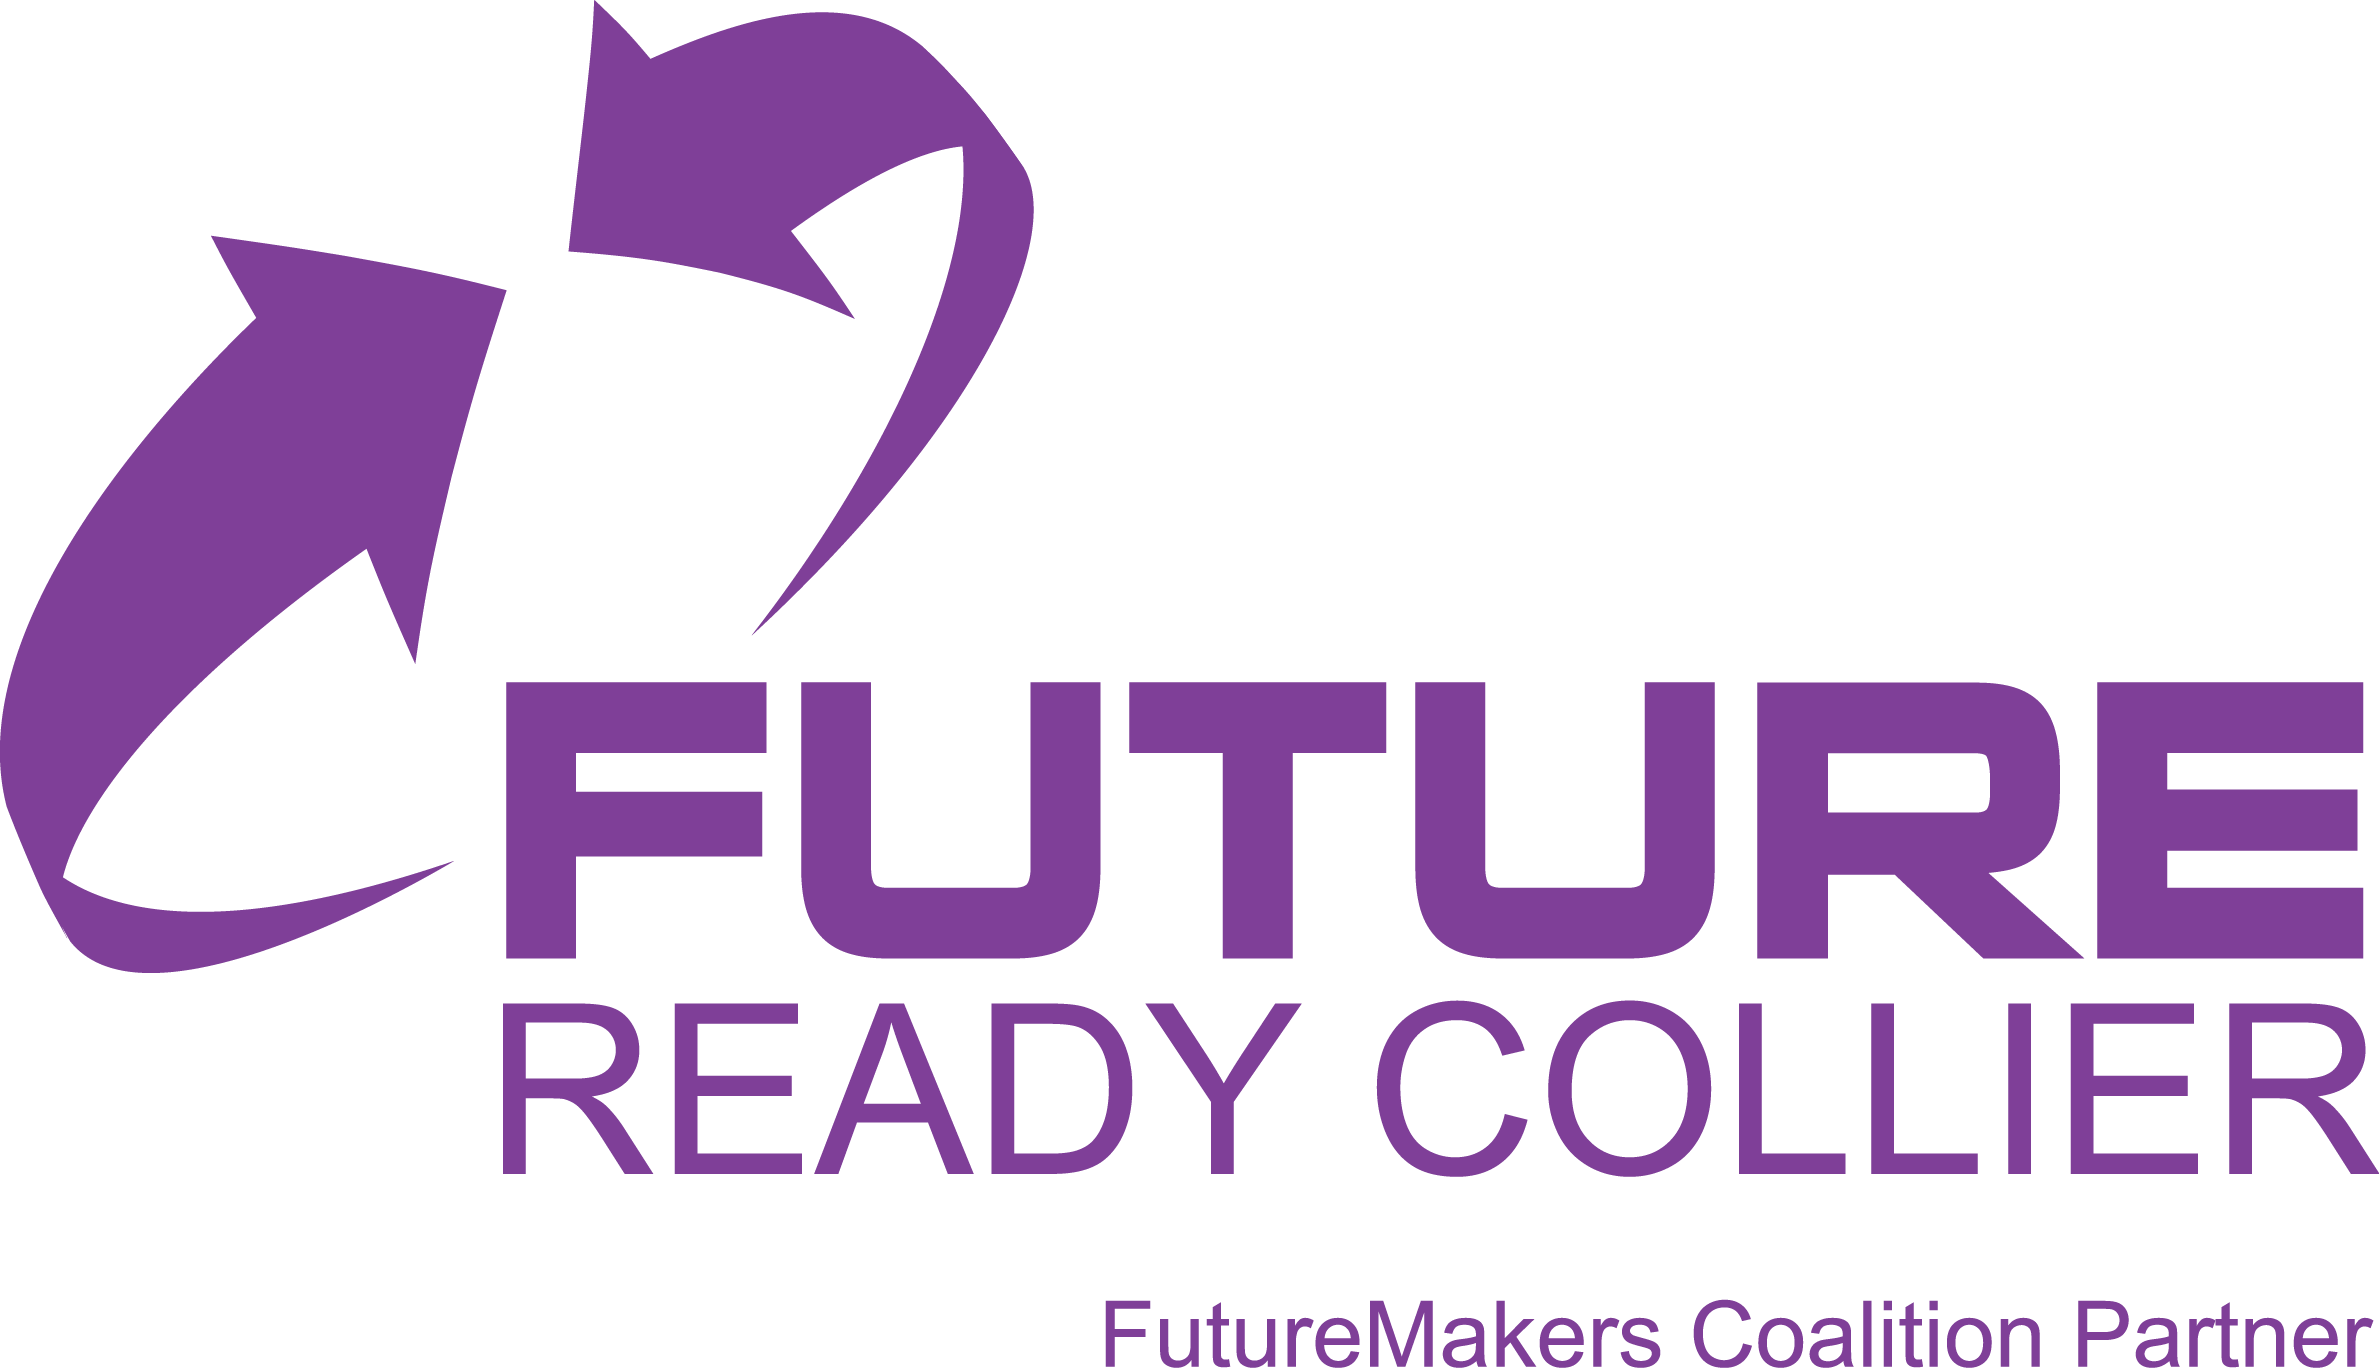 Future Ready Collier Purple Logo | Future Ready Collier - Naples, Florida